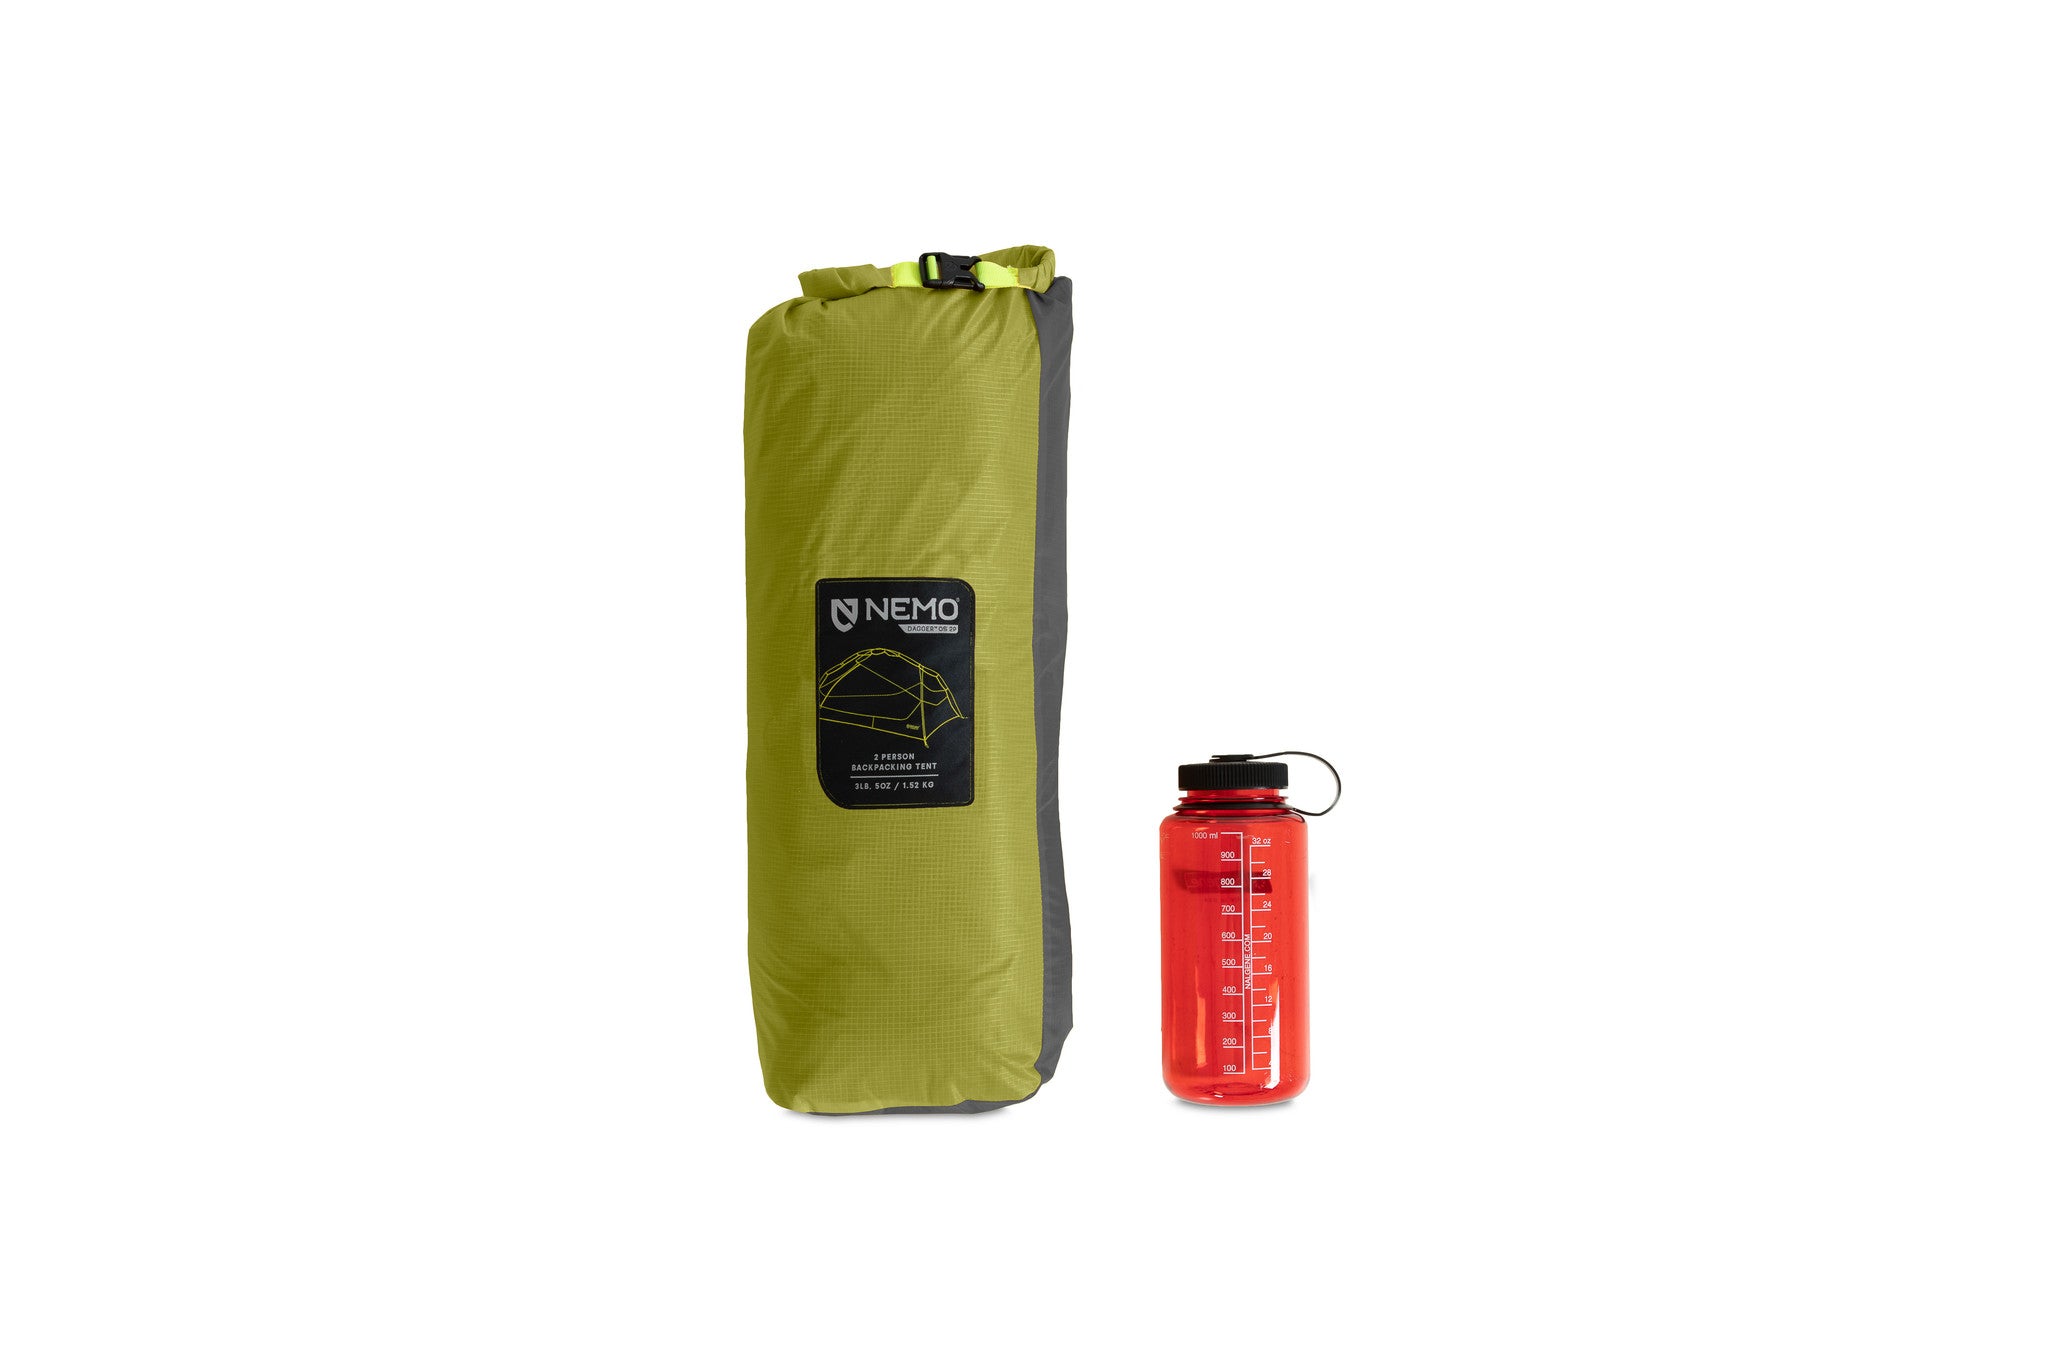 Nemo - Dagger OSMO 3P Lightweight Backpacking Tent